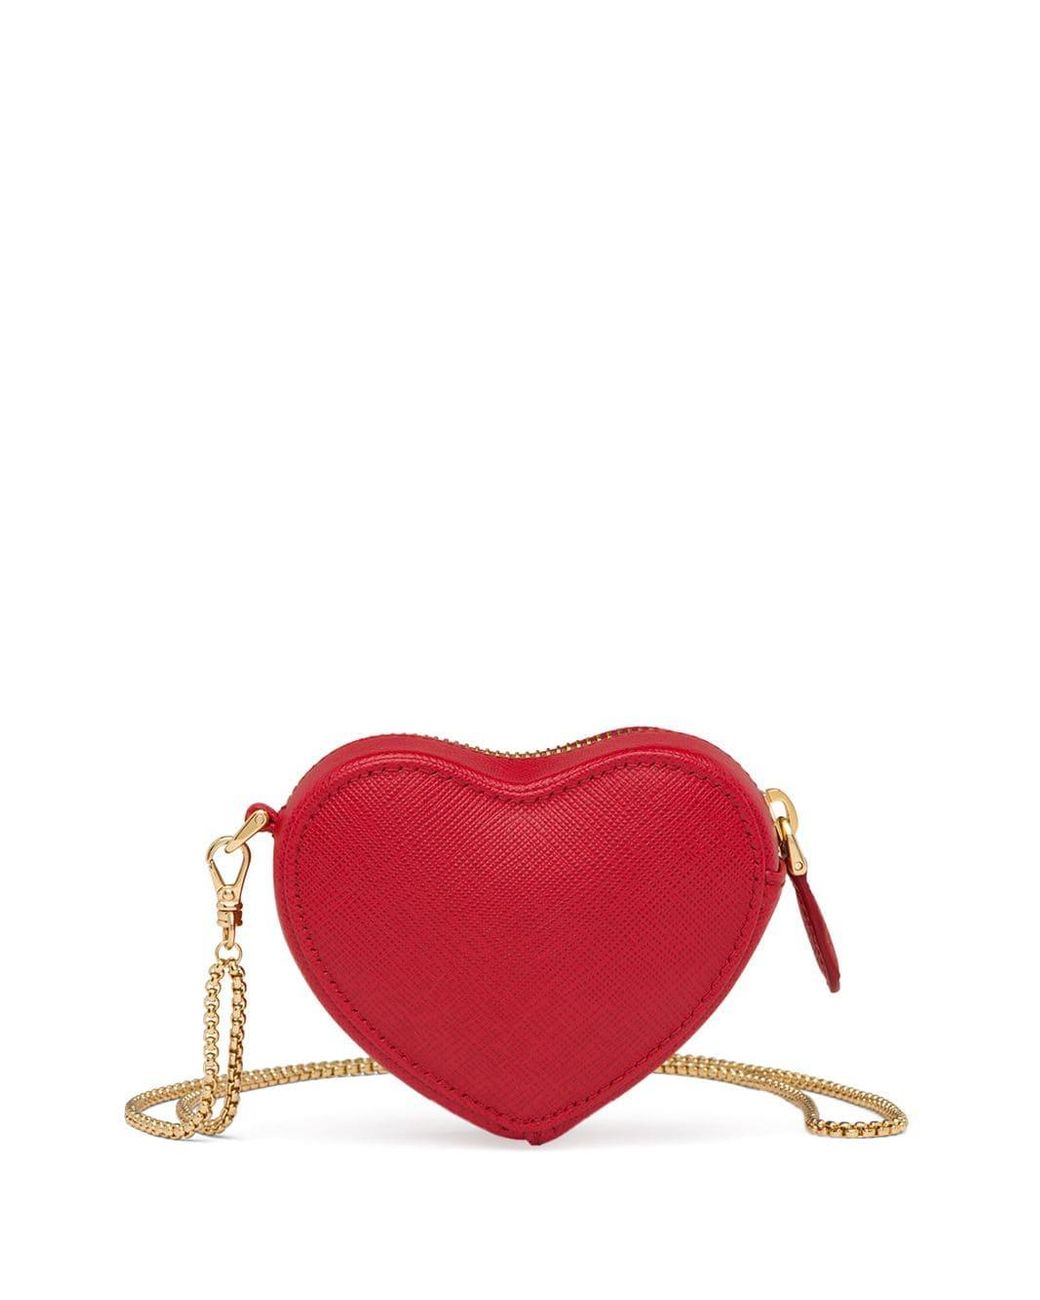 Prada Leather Heart Mini Bag in Red | Lyst